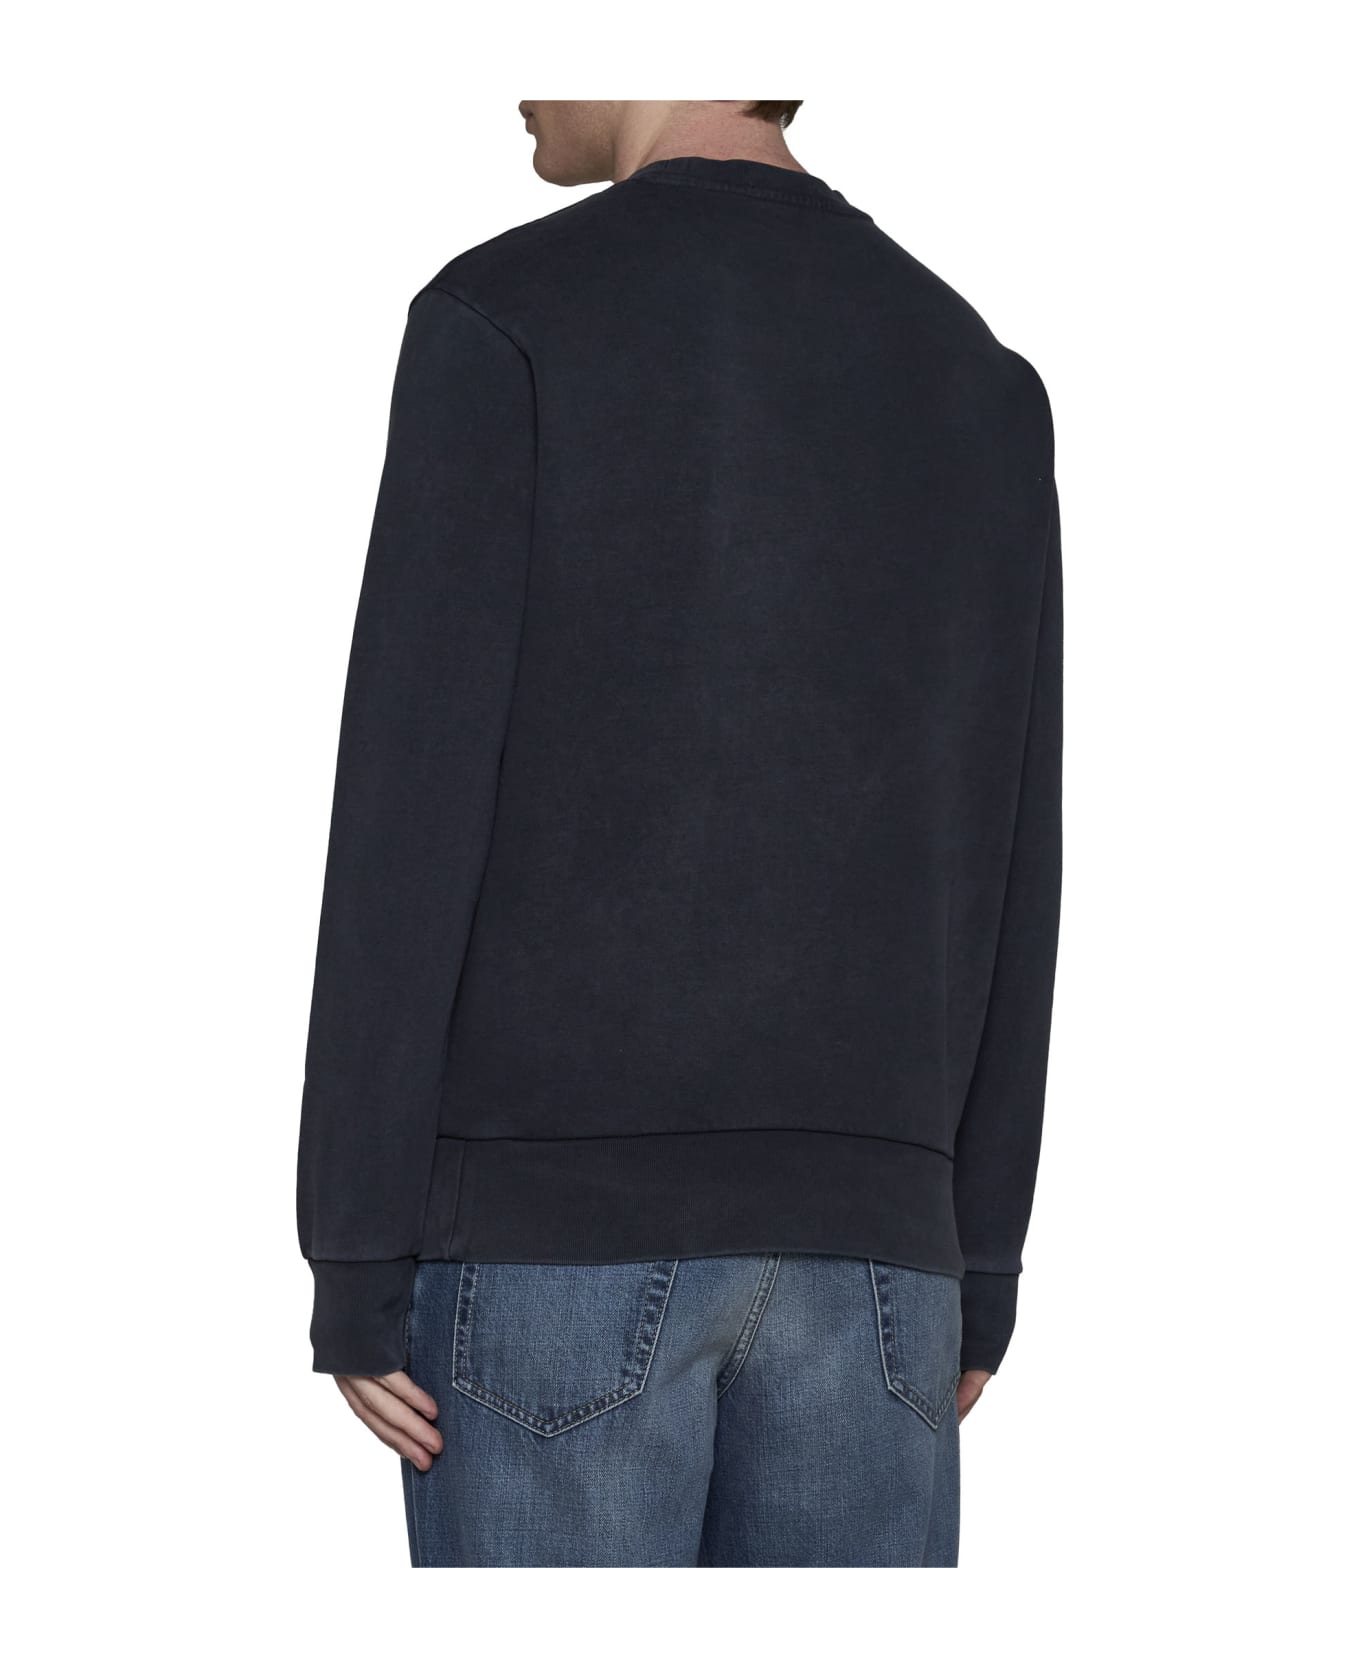 Polo Ralph Lauren Sweater - Faded black canvas